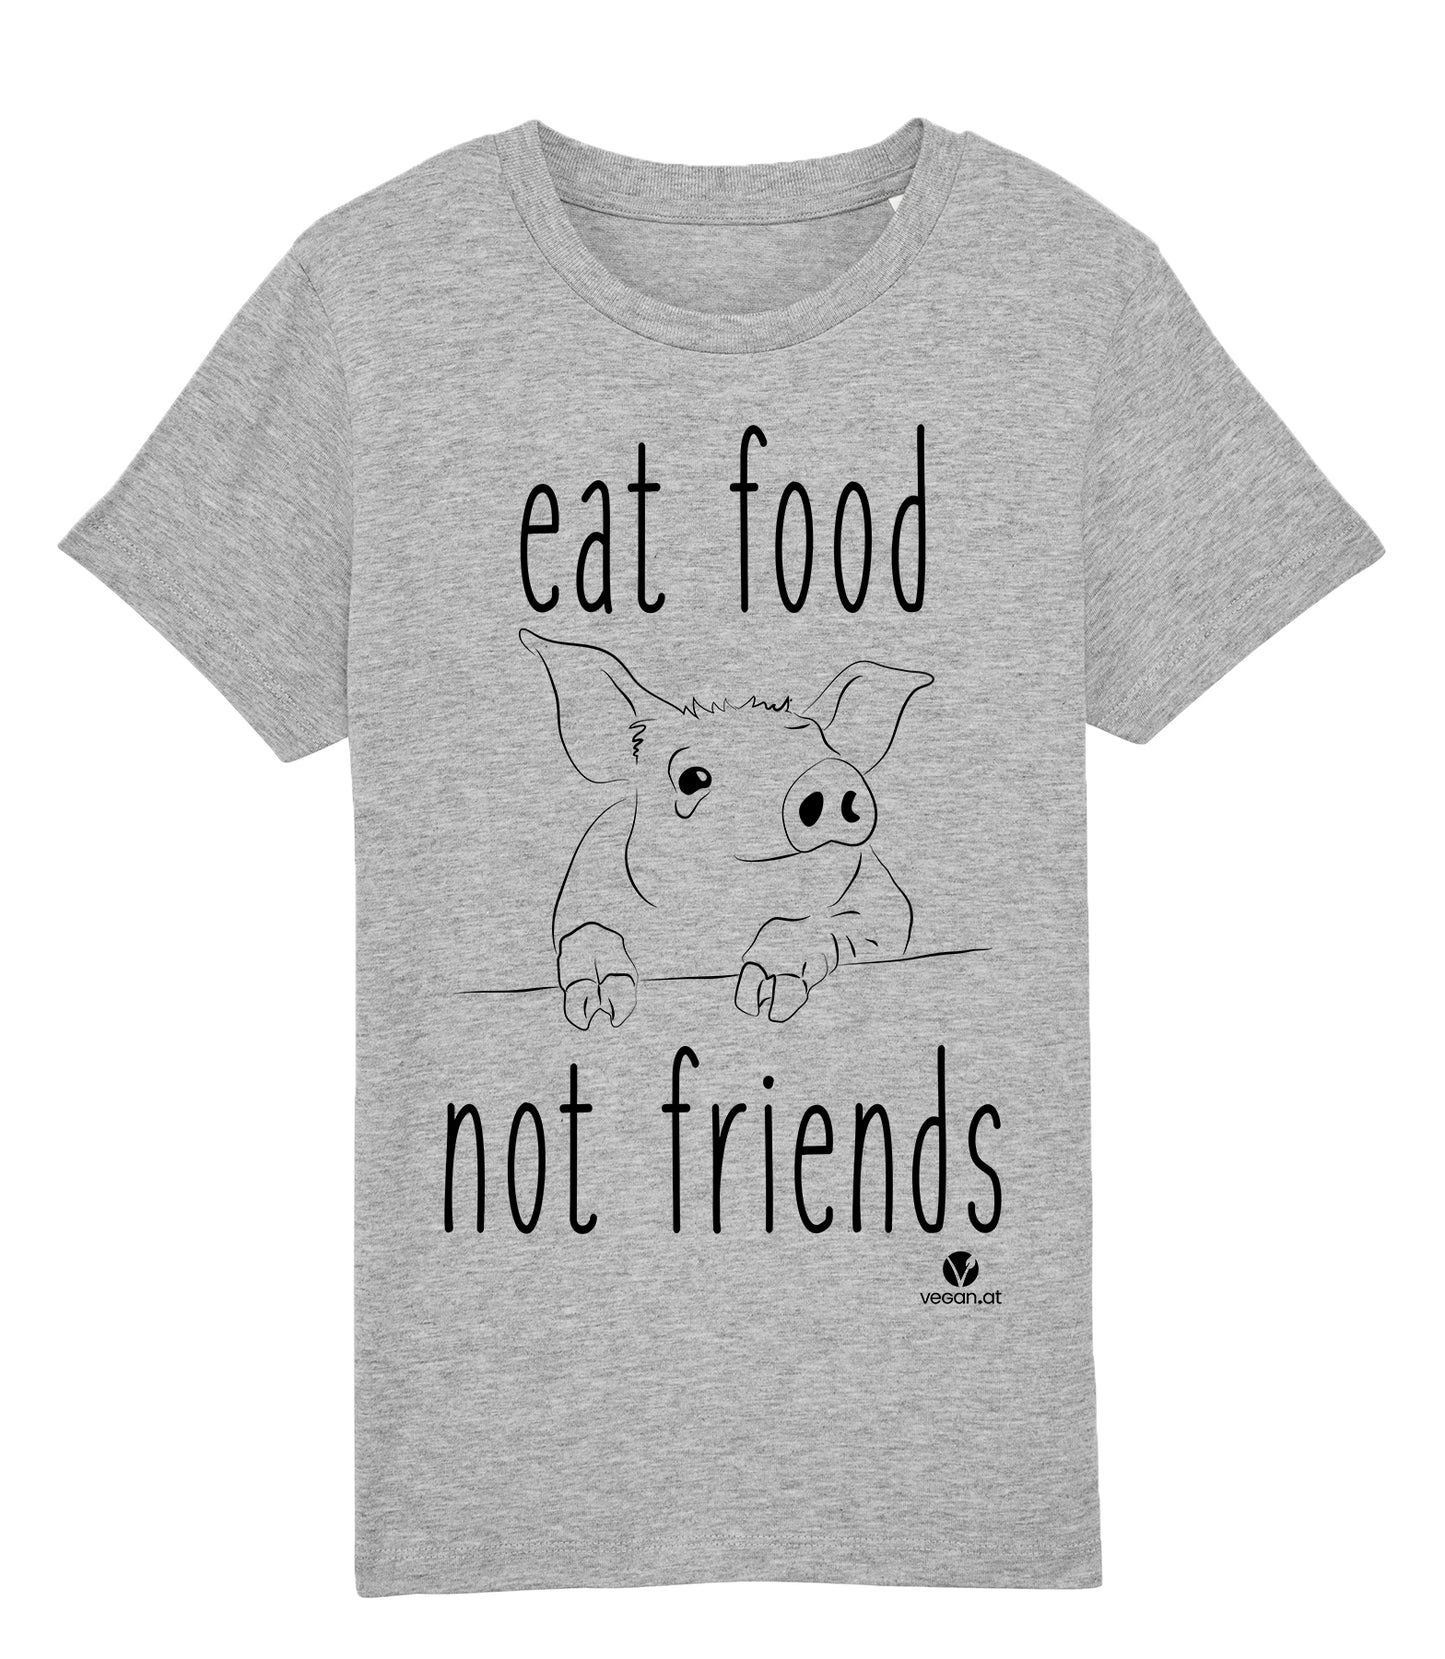 Kindershirt – Eat Food Not Friends